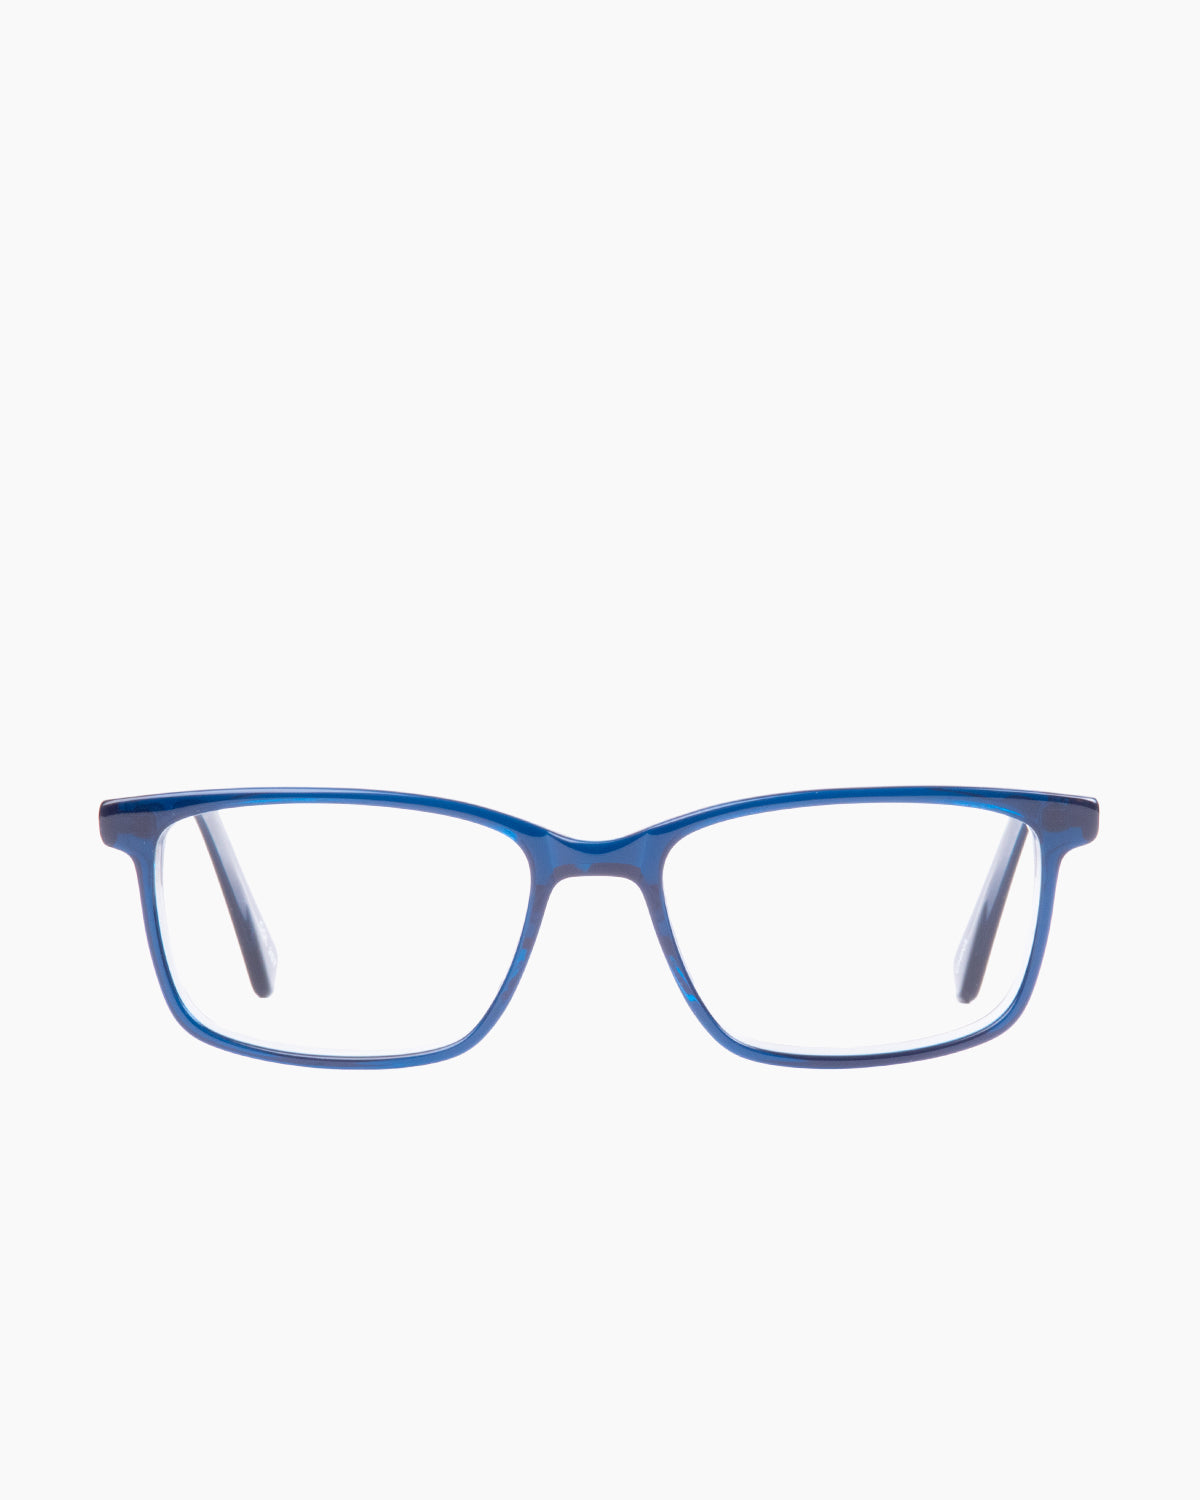 Evolve - Carter - 257 | Bar à lunettes:  Marie-Sophie Dion